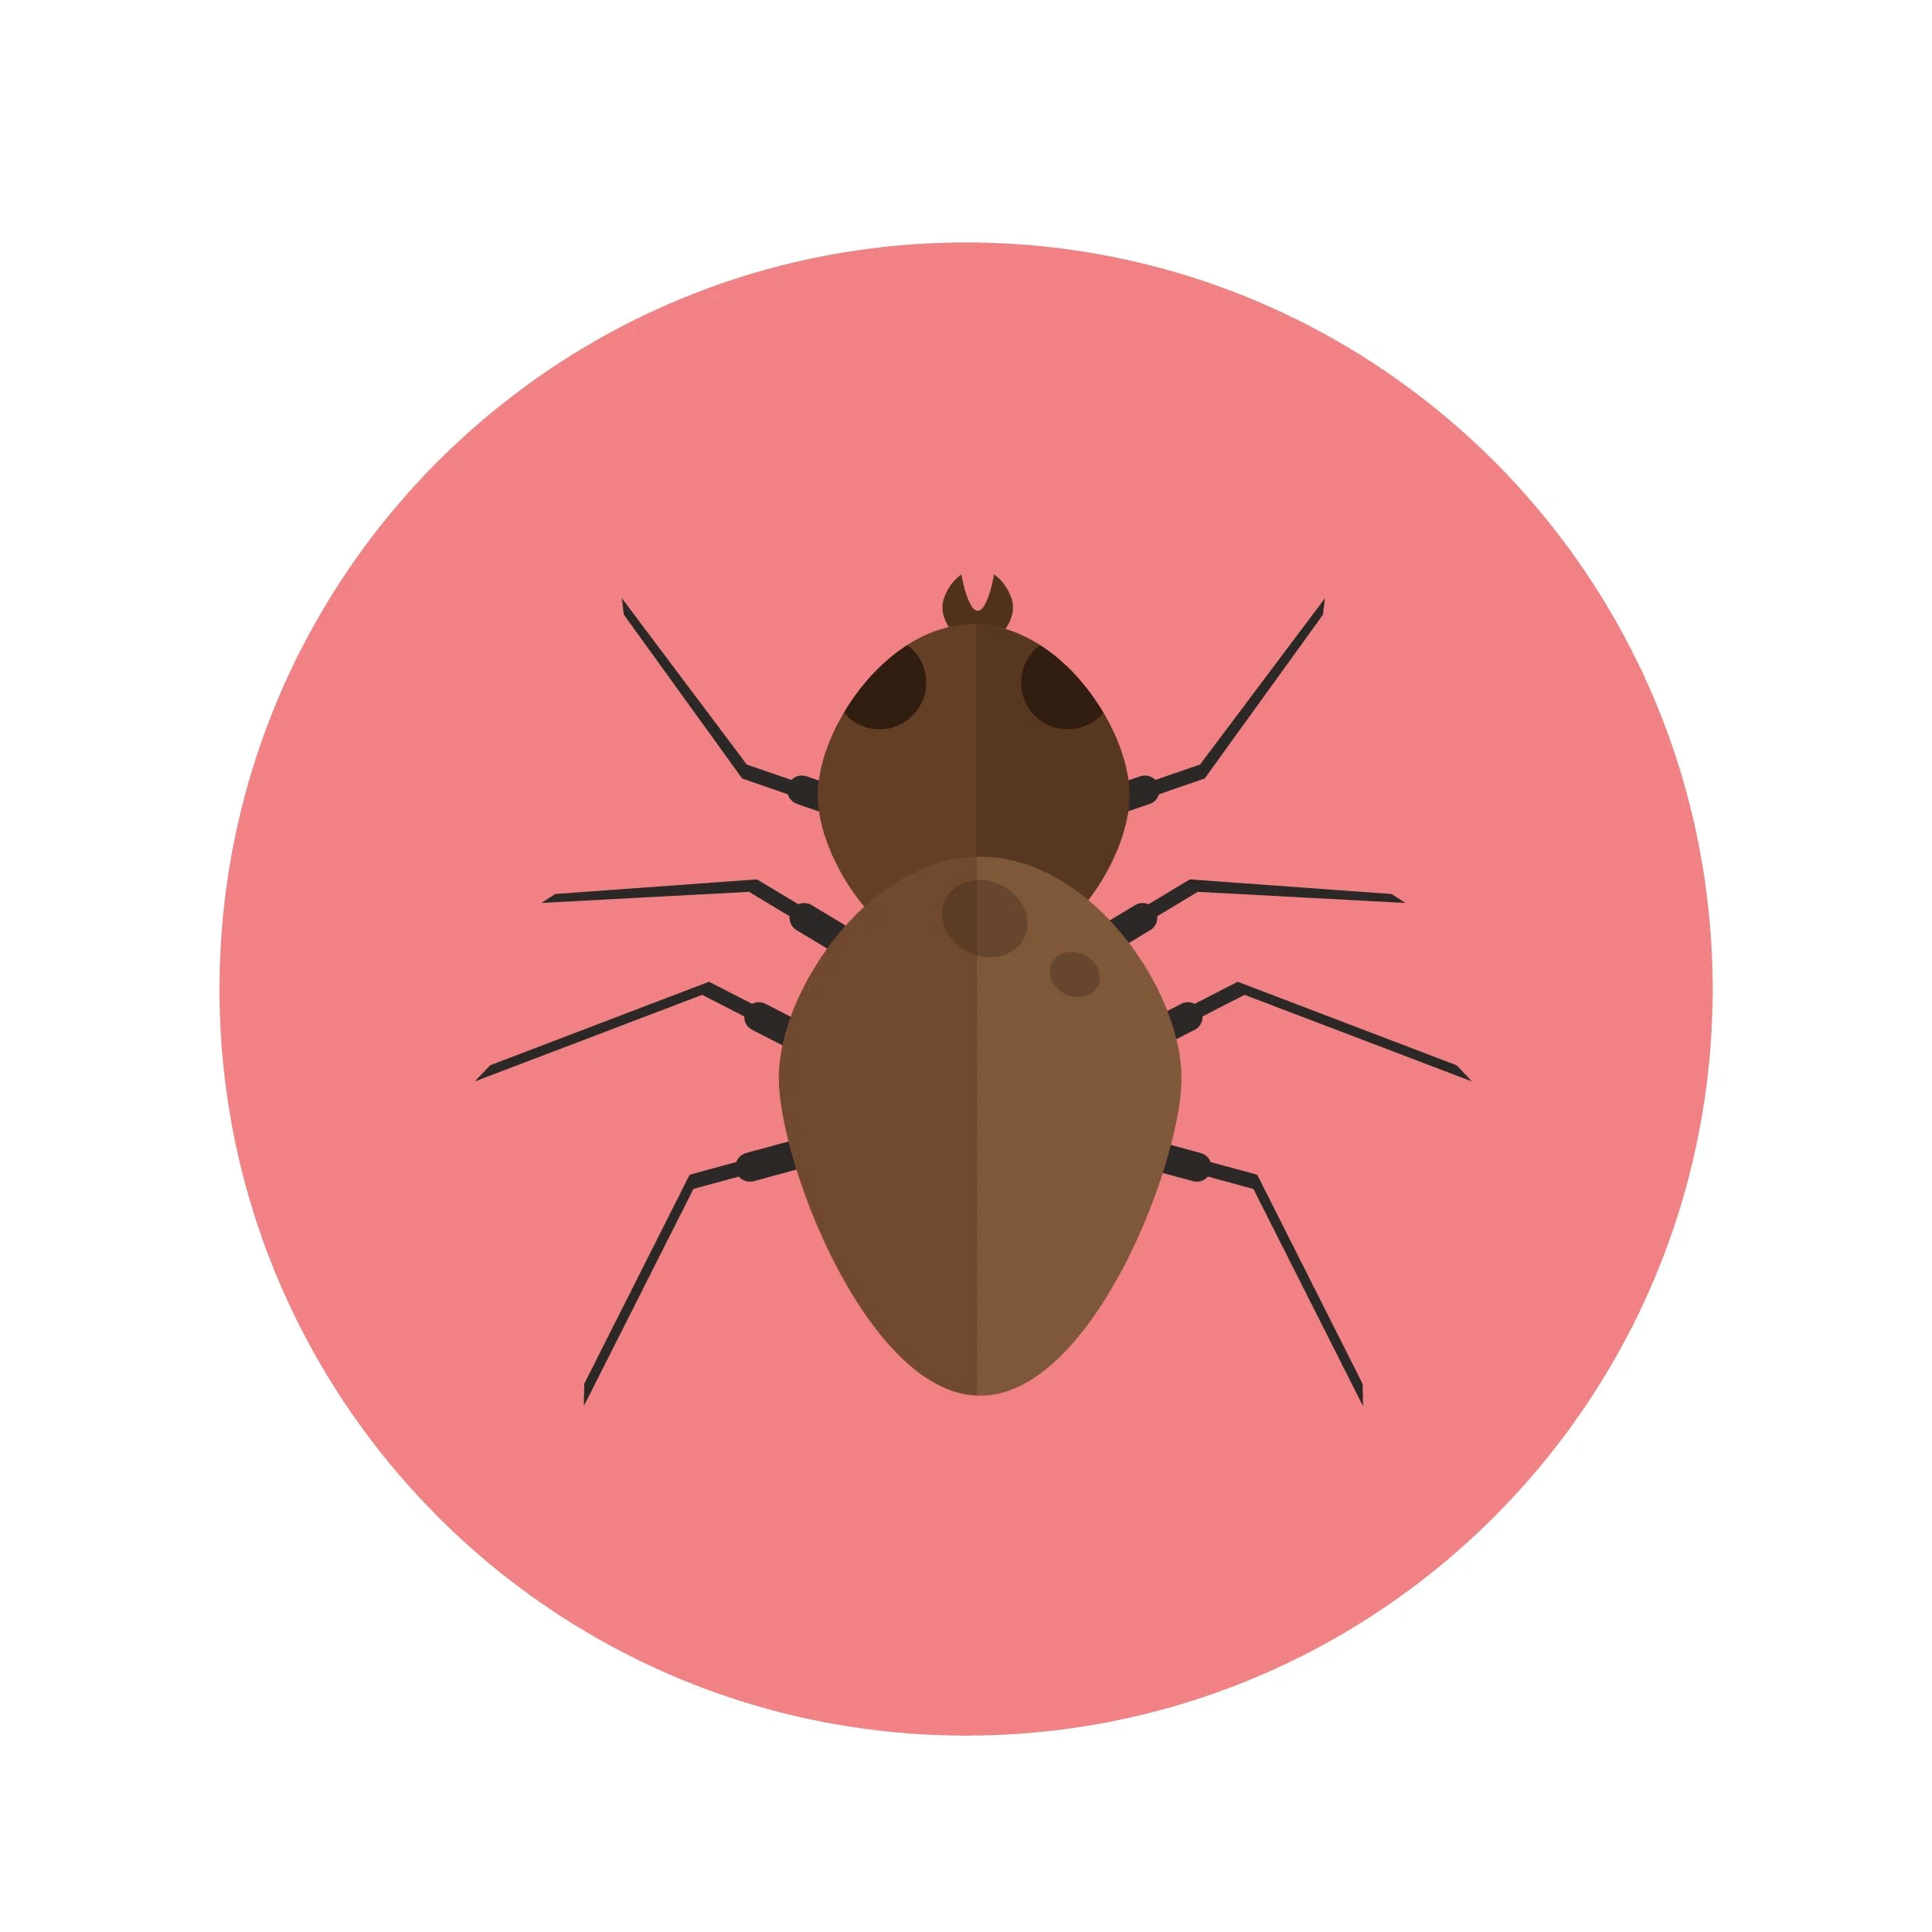 cartoon image of a bed bug